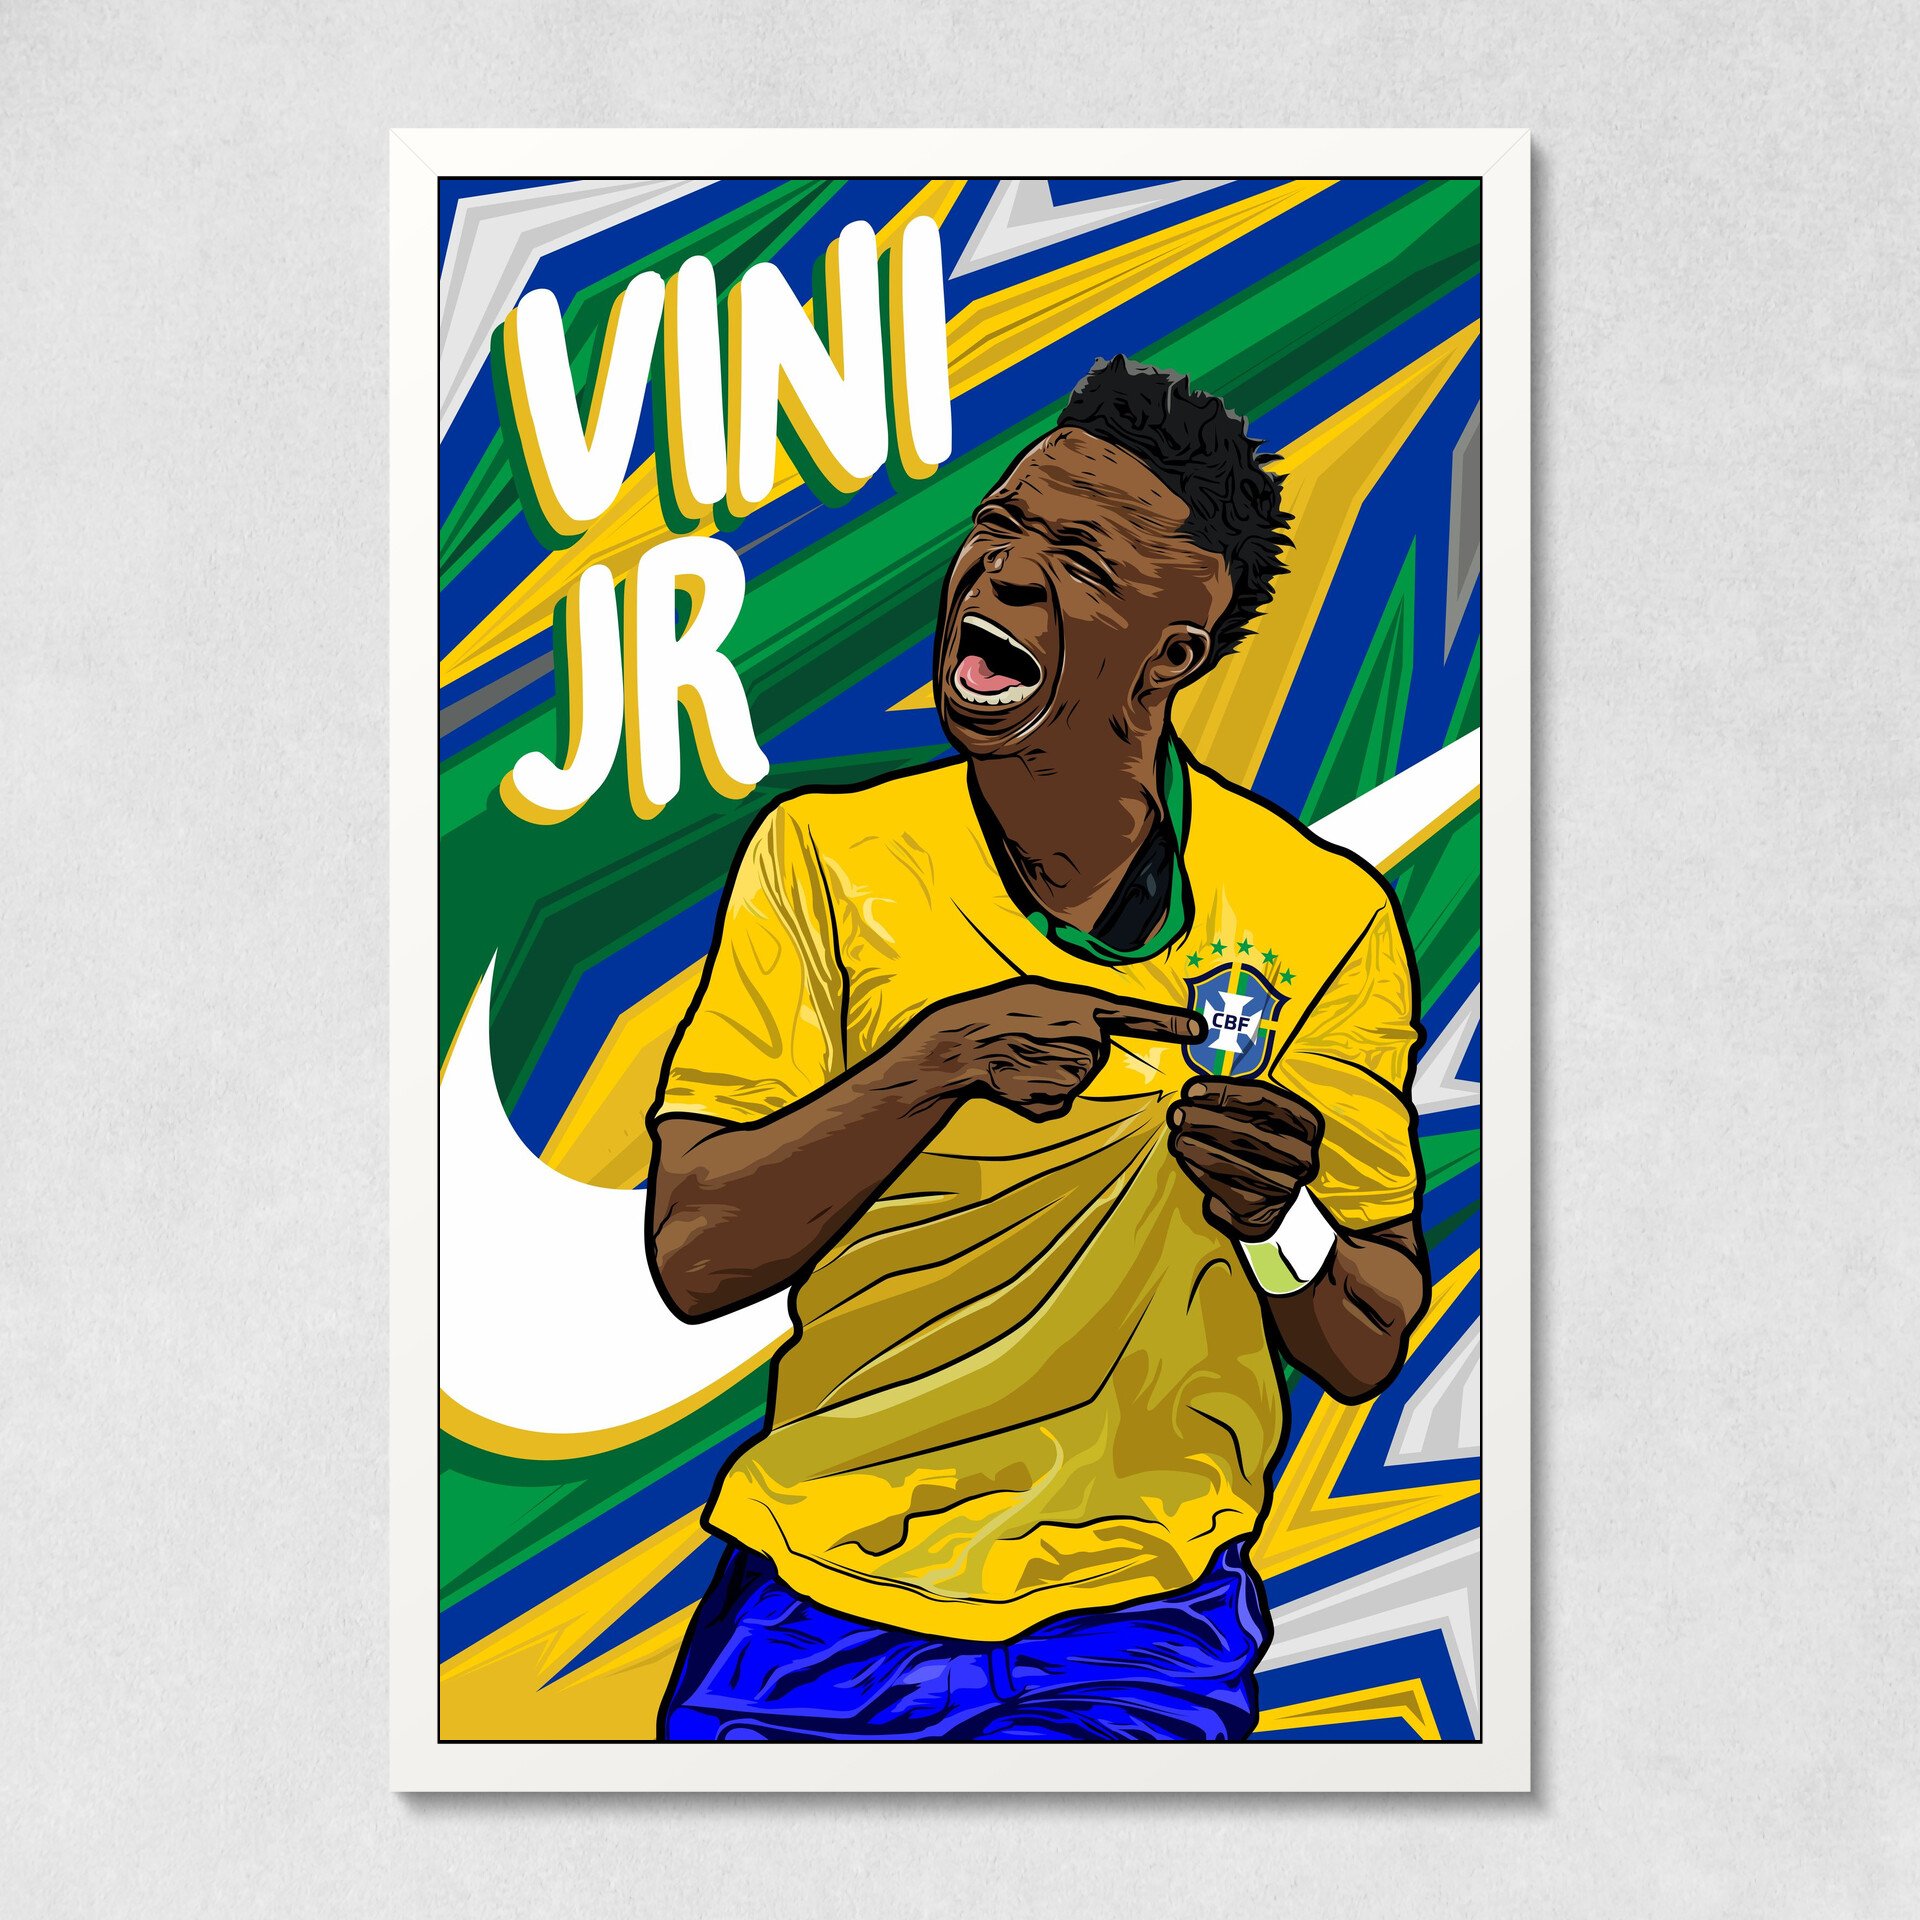 Vini Brazil by Milton Soares